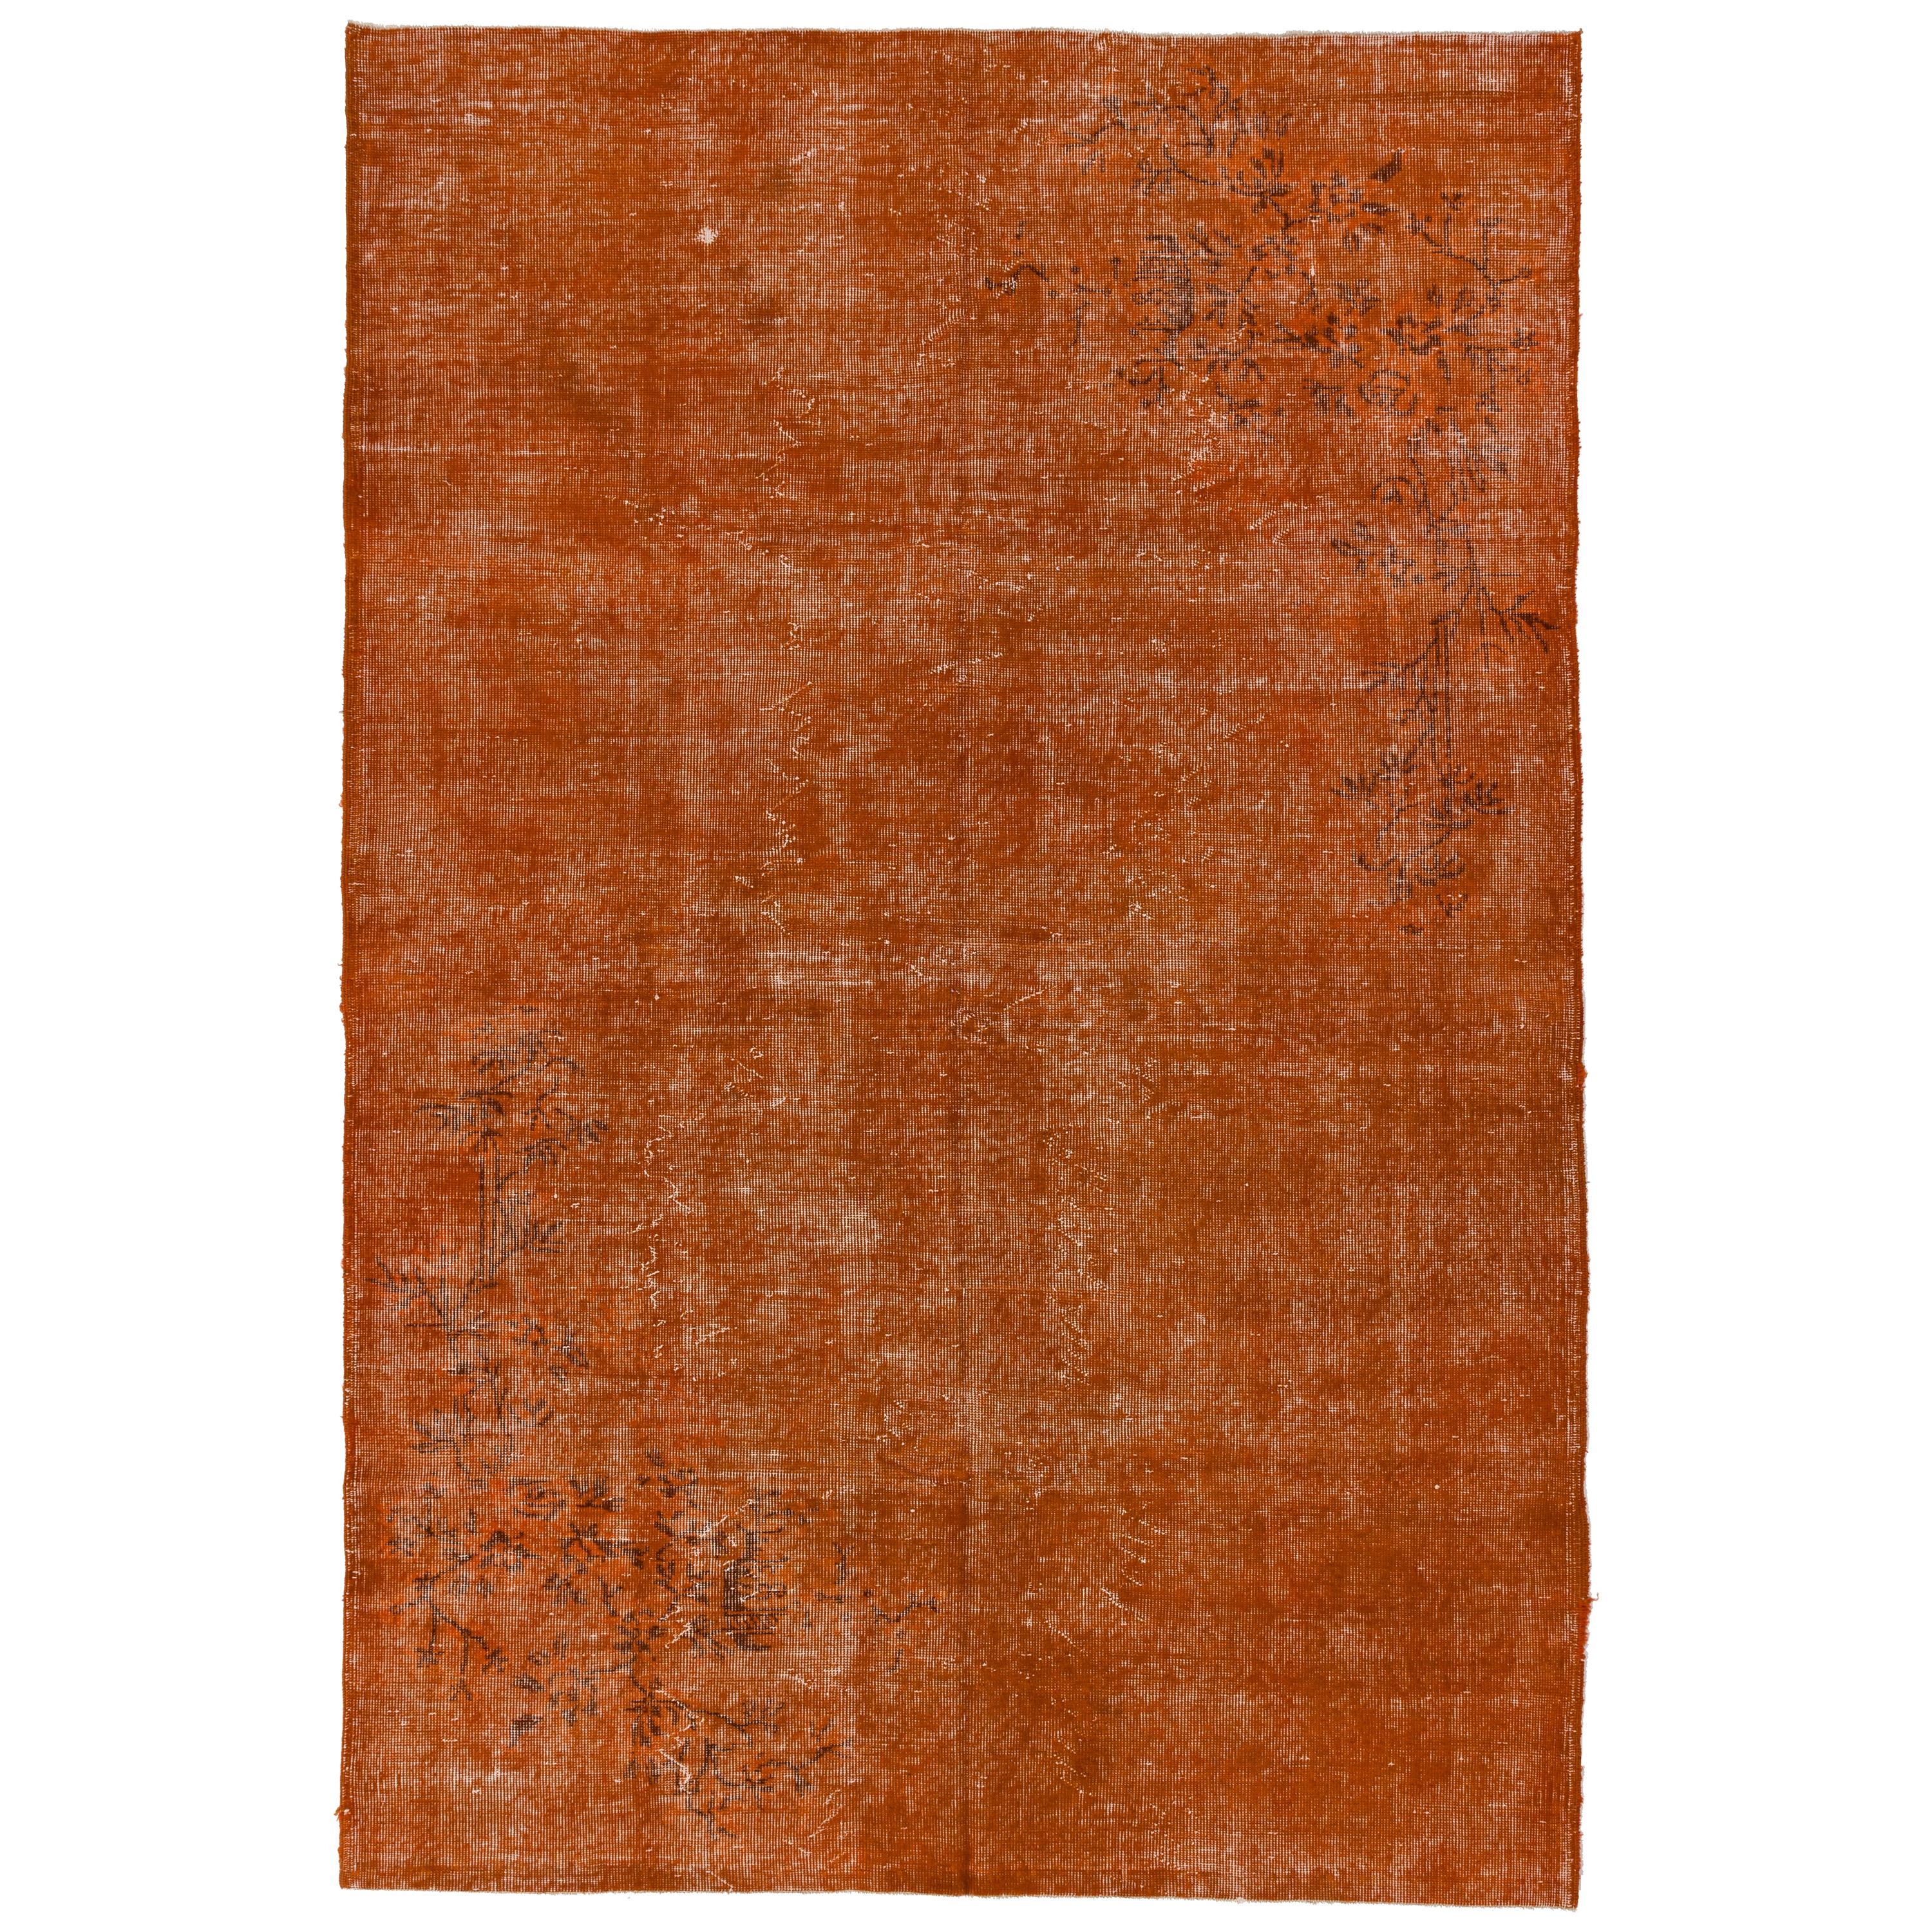 6x9 Ft Distressed Vintage Rug Overdyed in Burnt Orange, Woolen Floor Covering